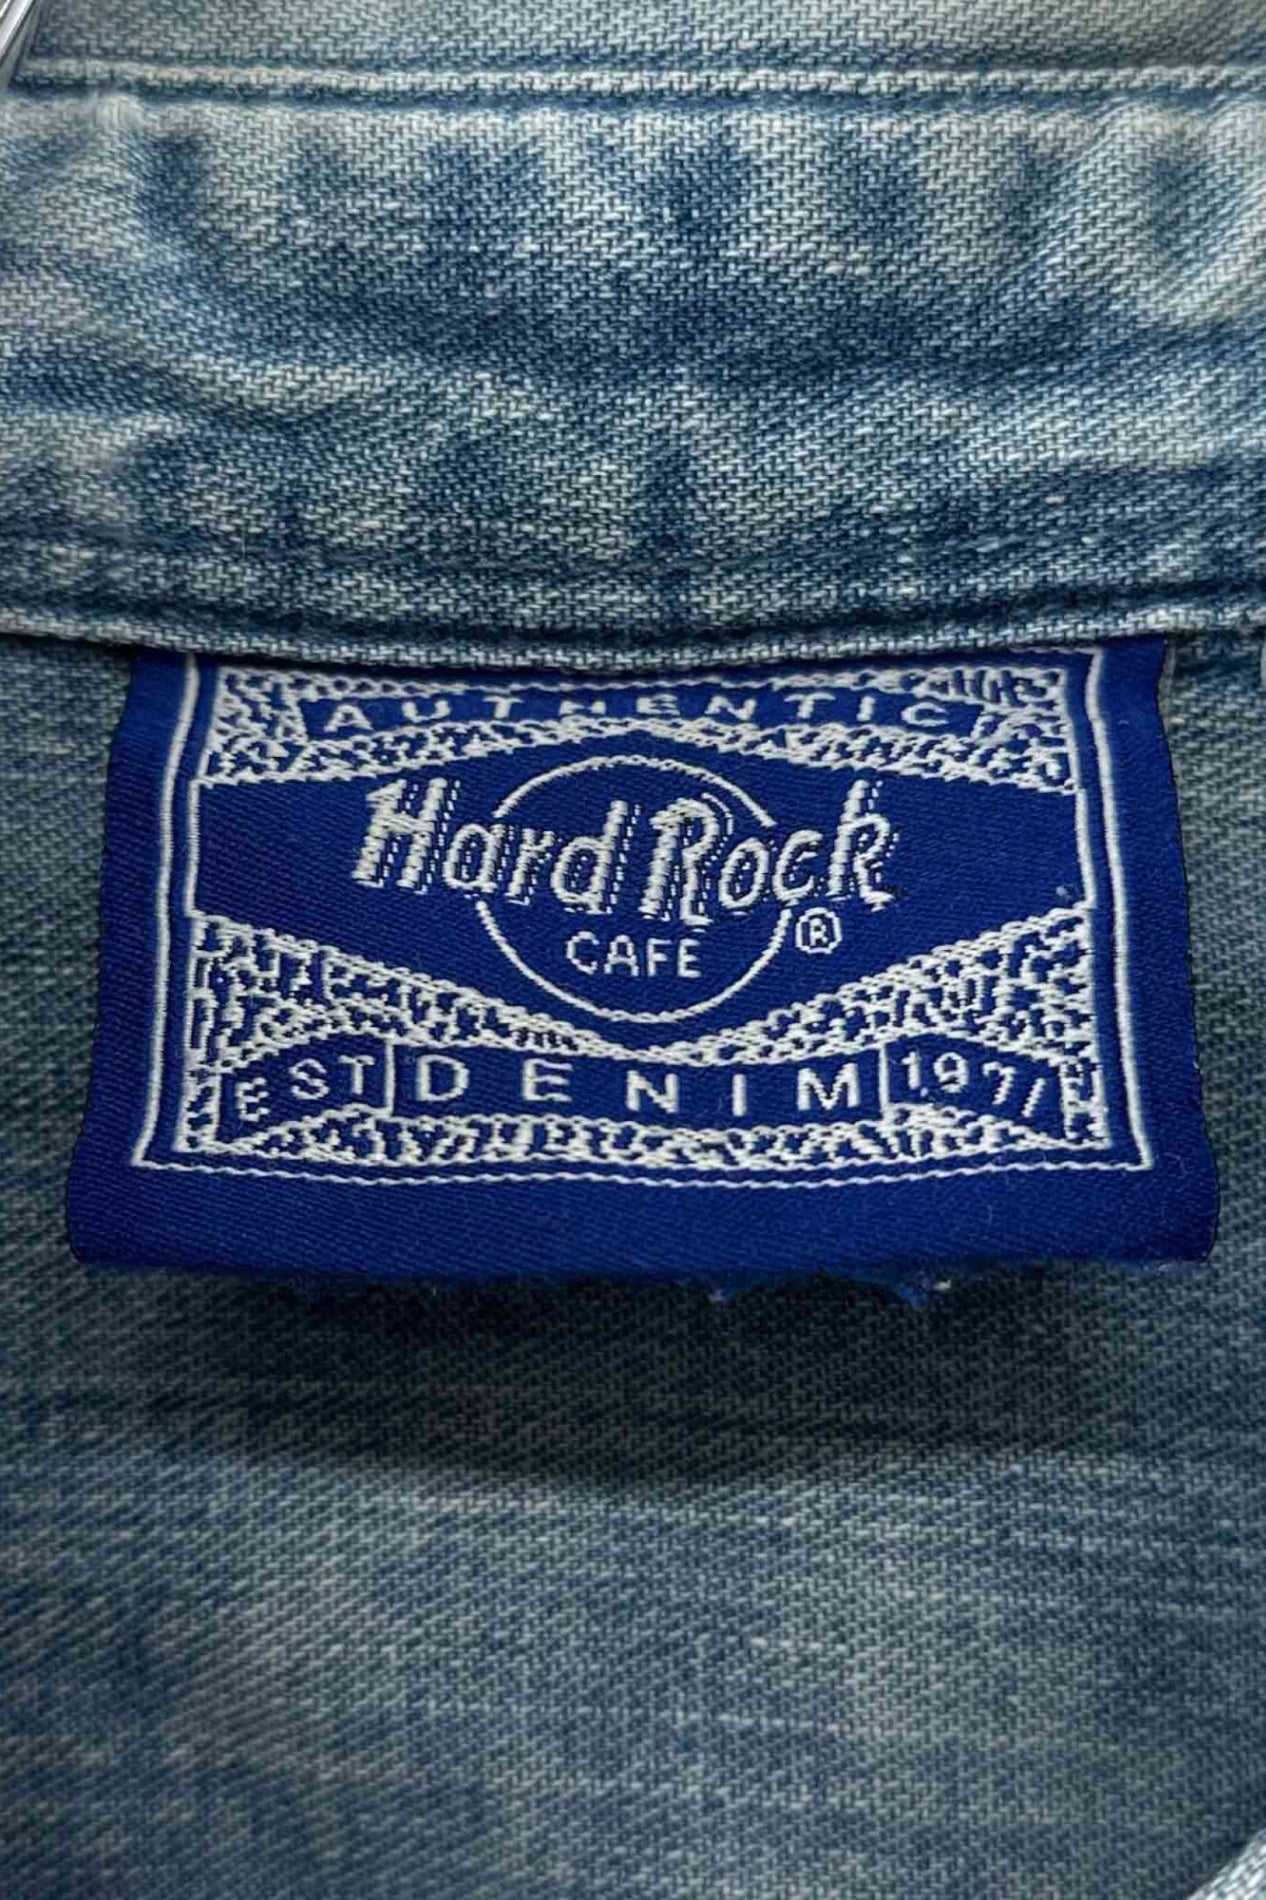 Hard Rock Cafe denim shirt